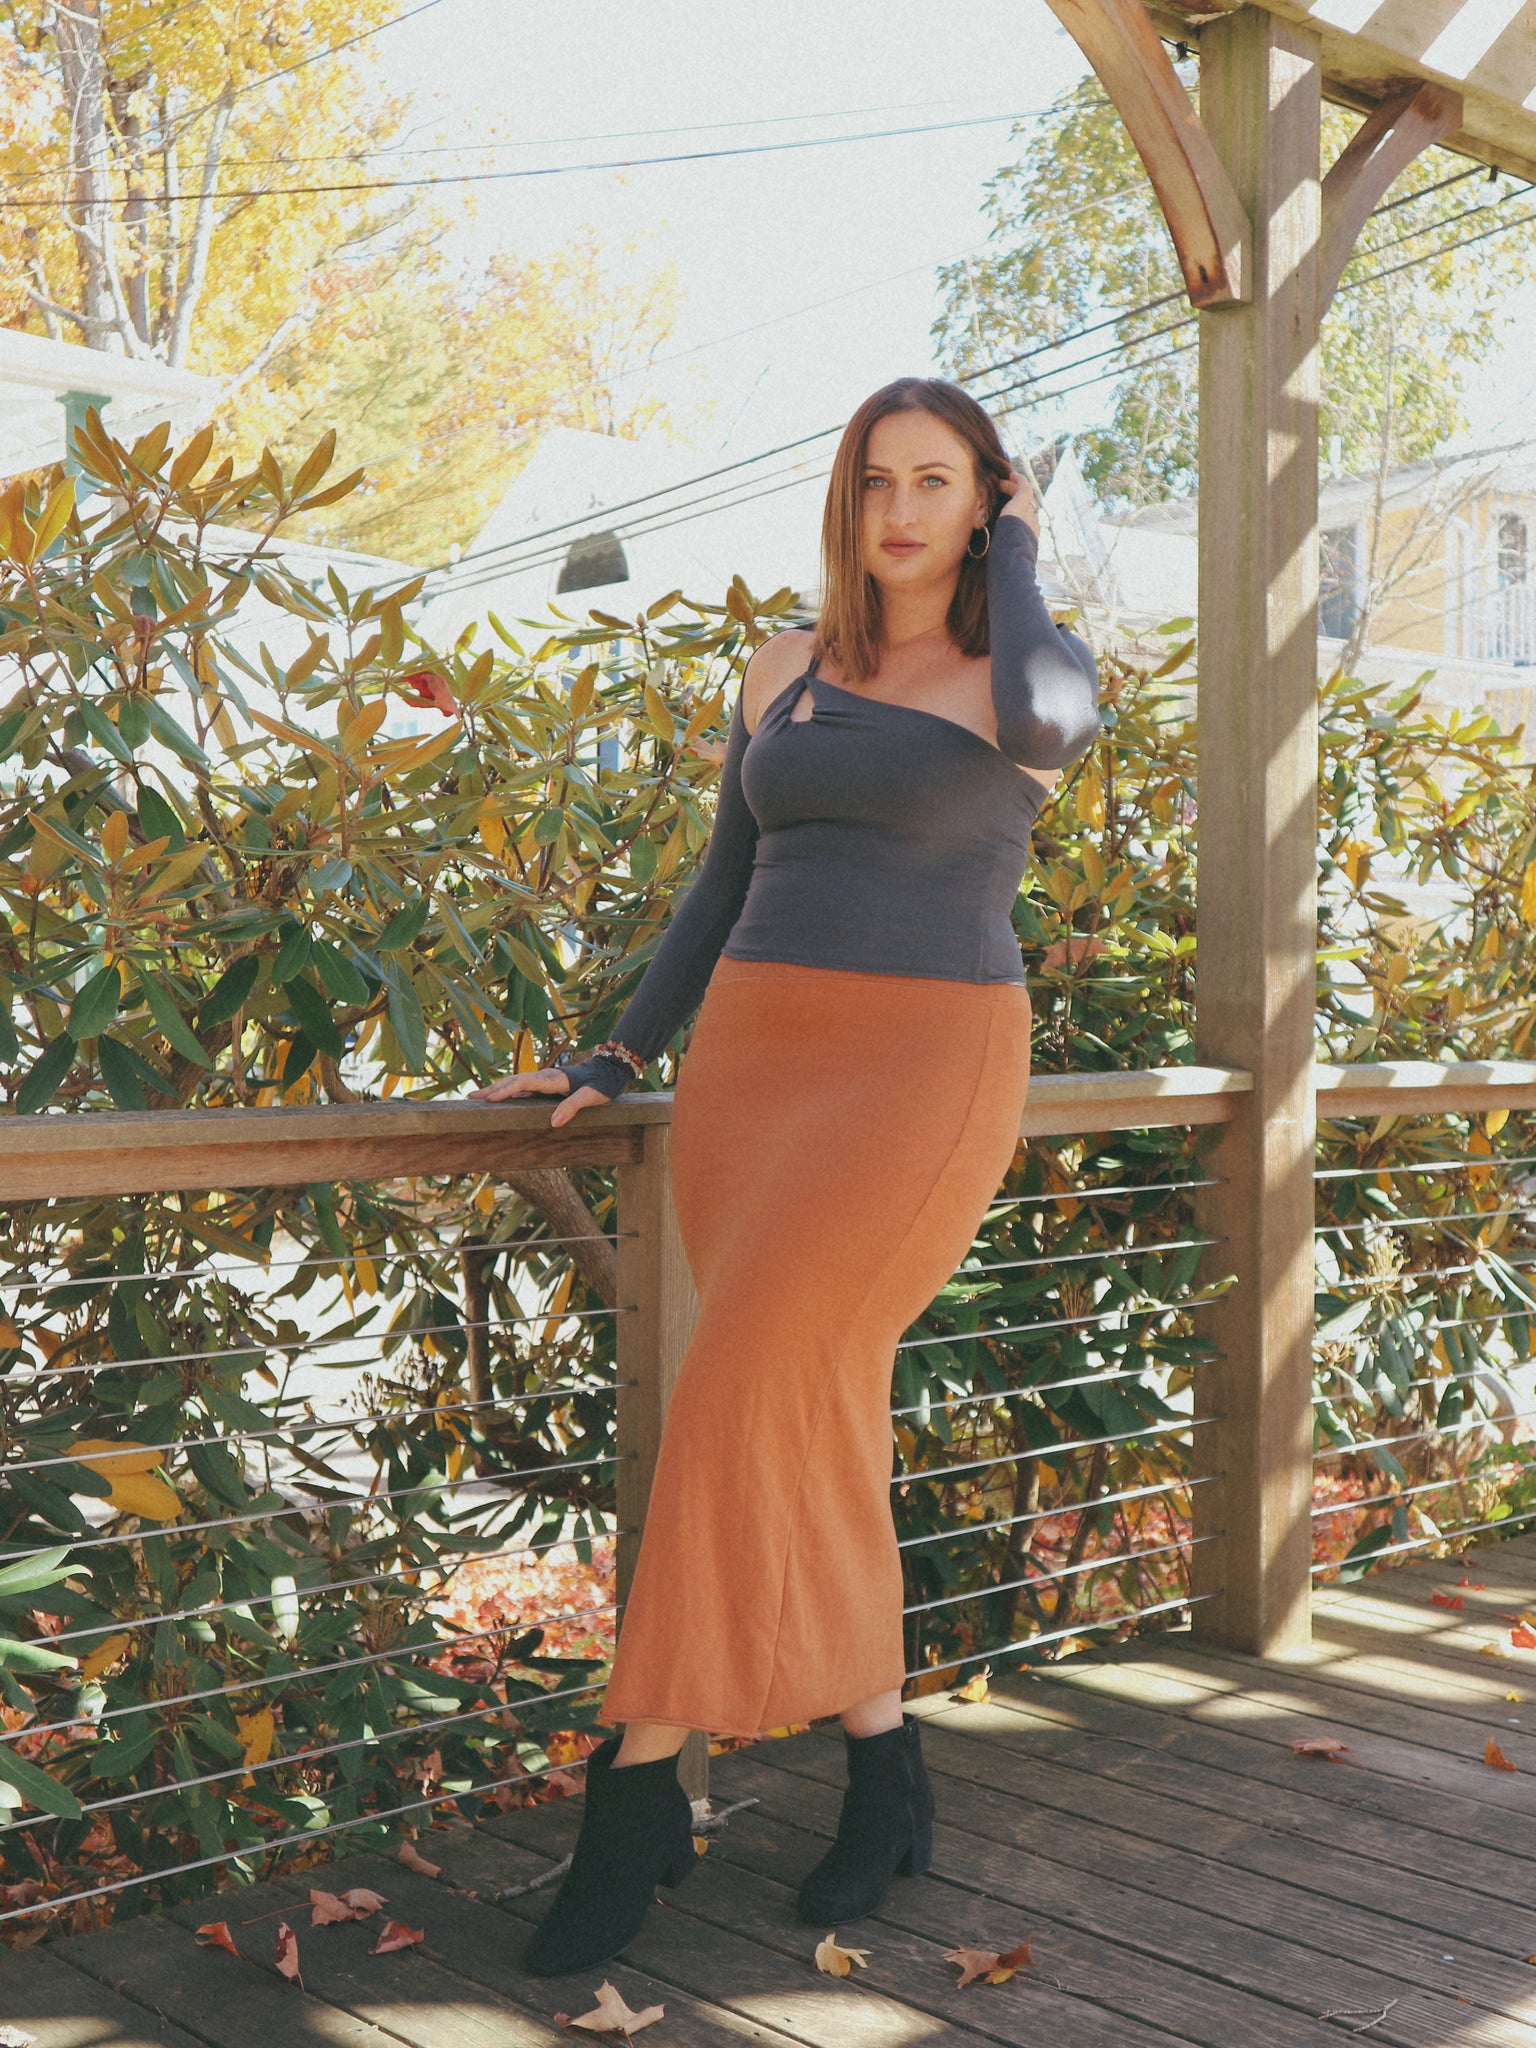 woman outdoors wearing skirt